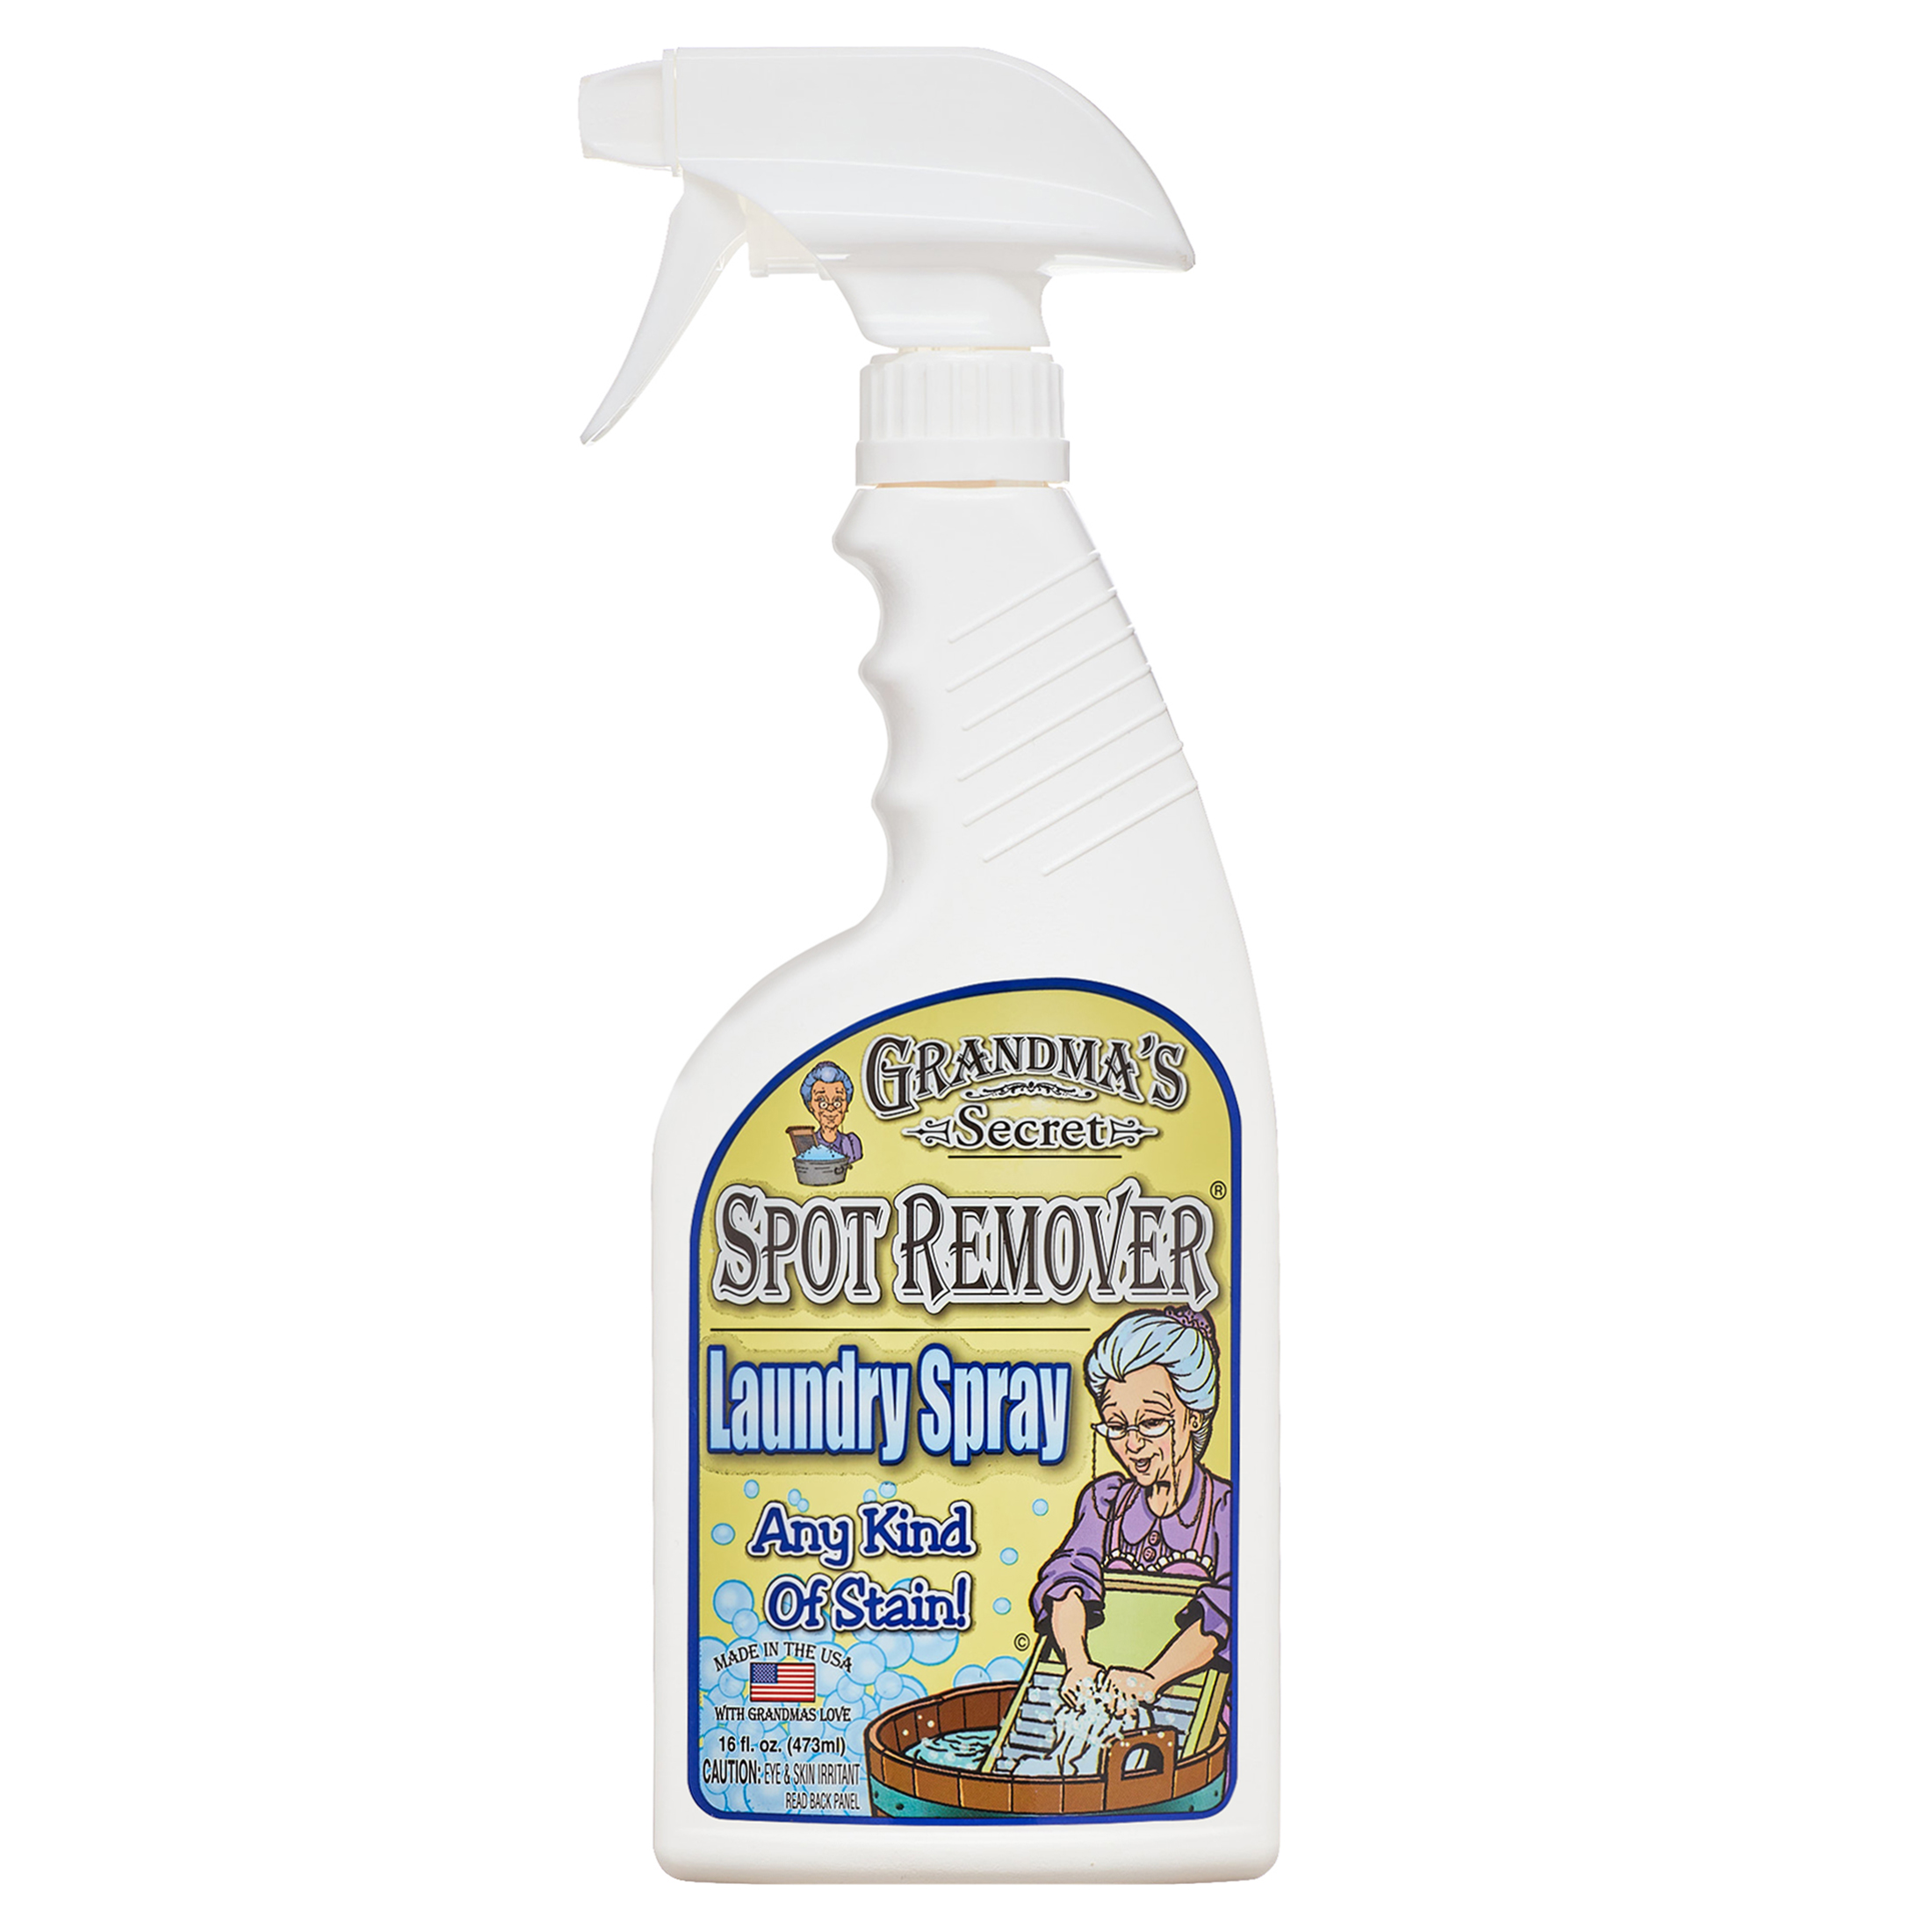 Grandma's Secret Spot Remover Laundry Spray, 16 Ounce - image 1 of 8